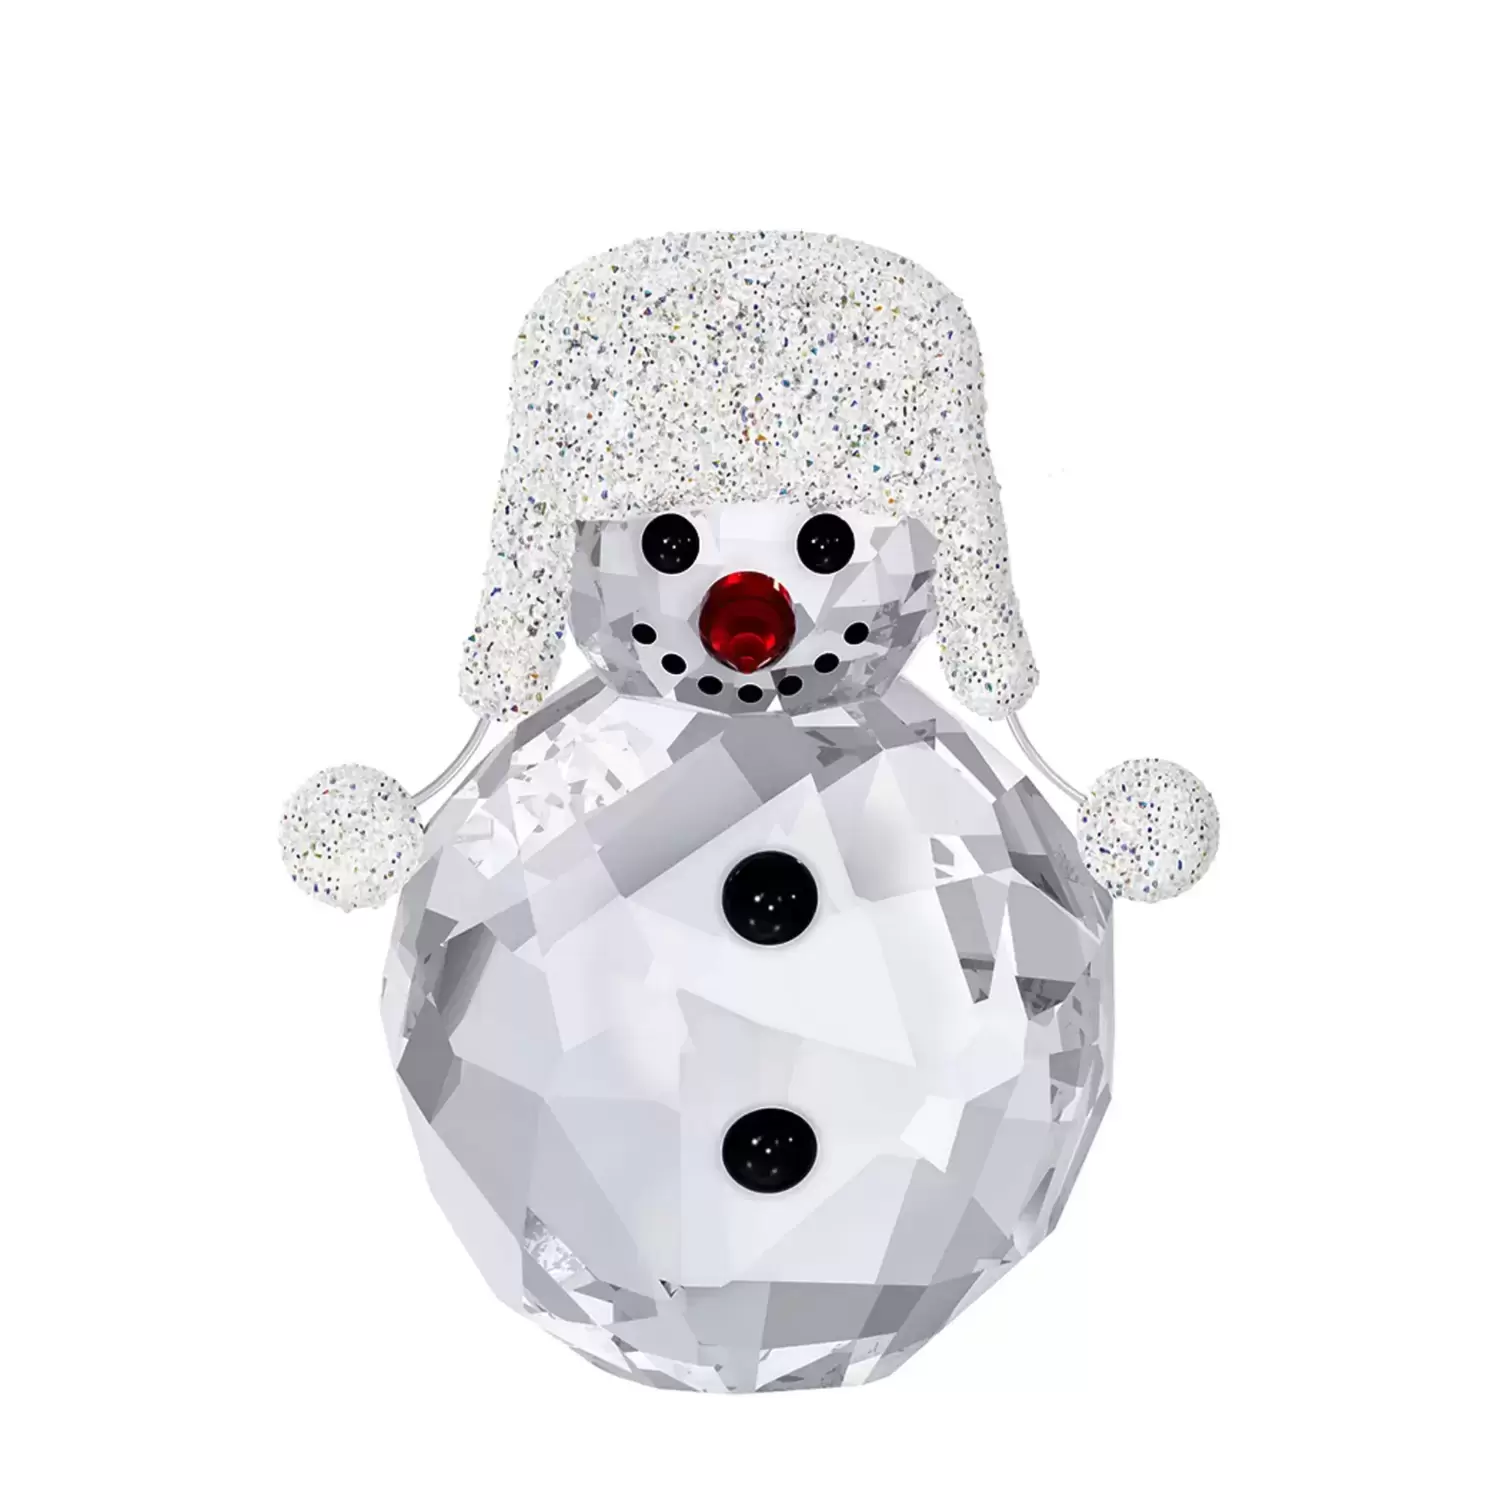 Swarovski Crystal Figures - Snowman